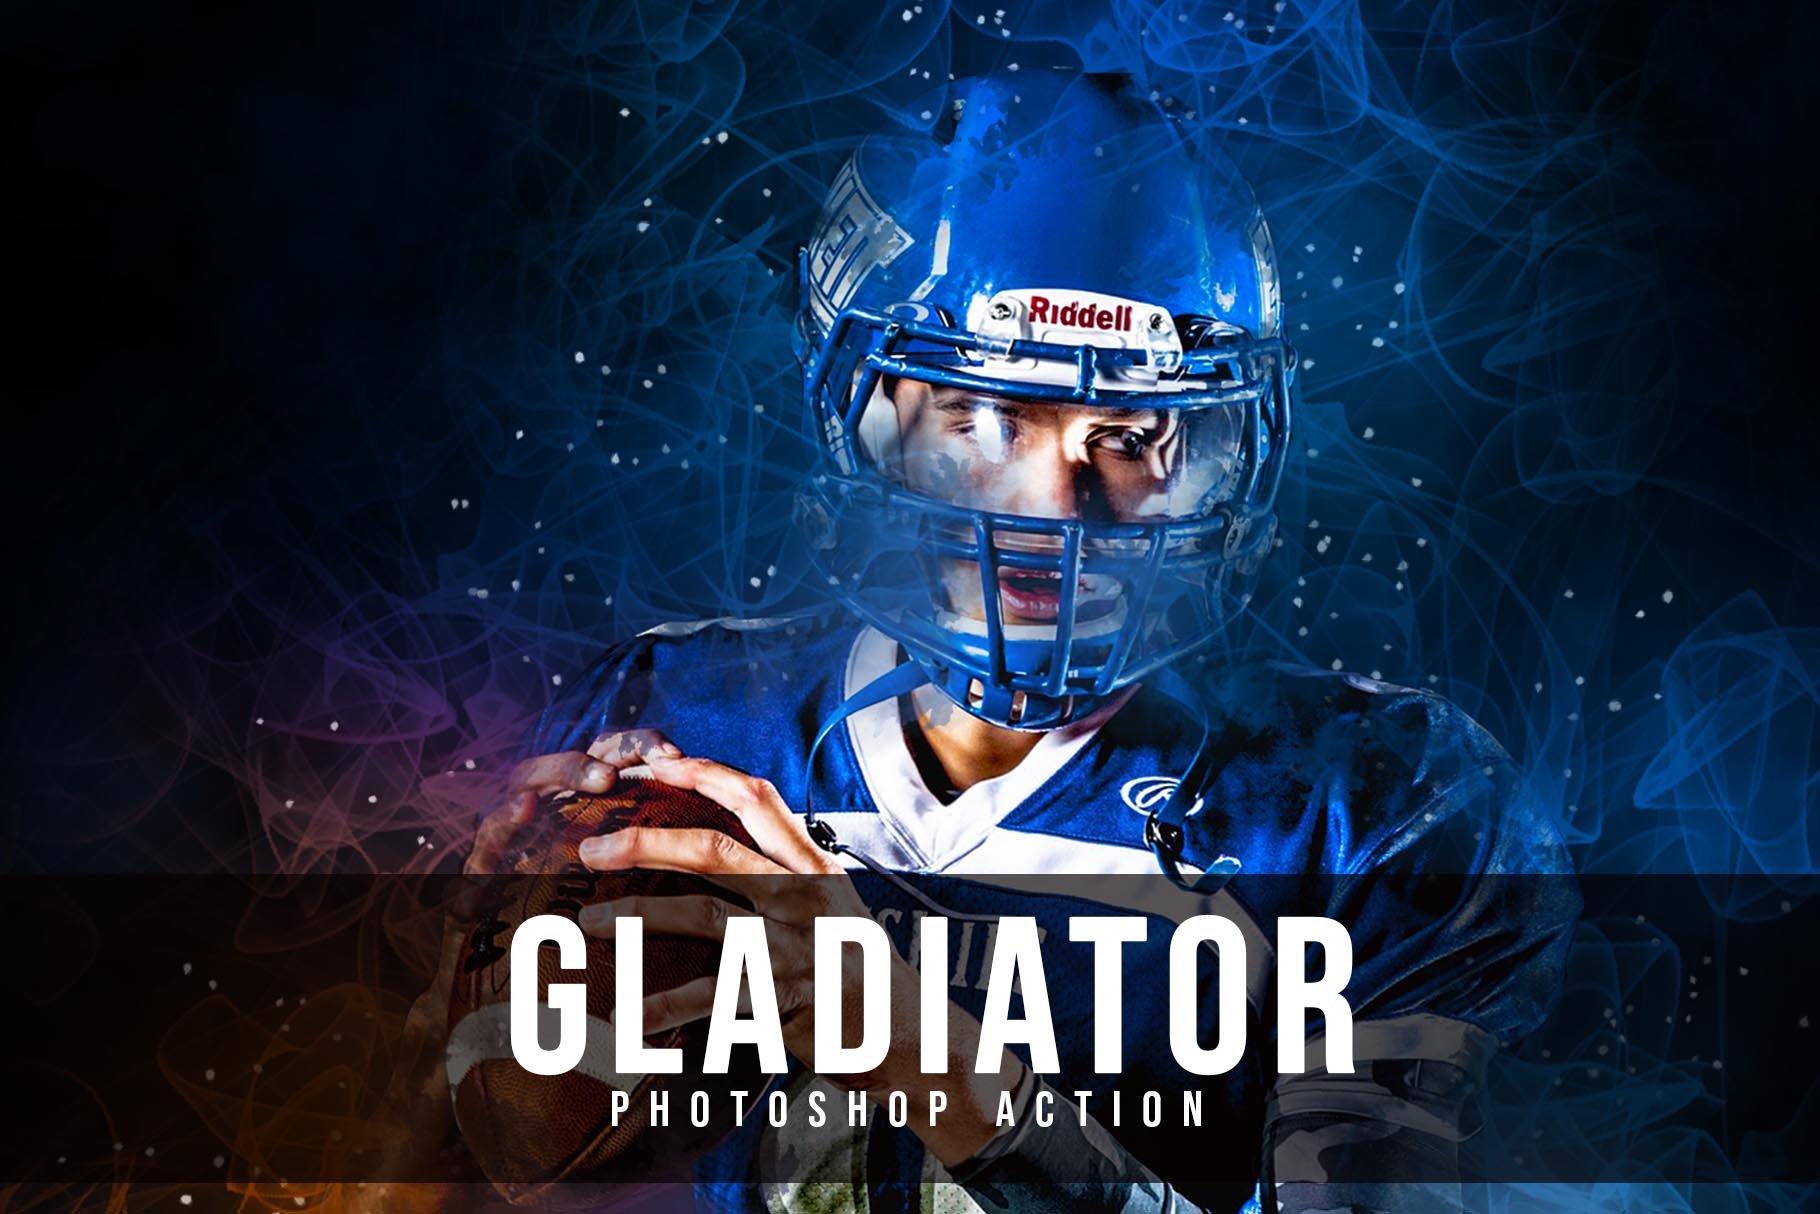 Gladiator Photoshop Actioncover image.